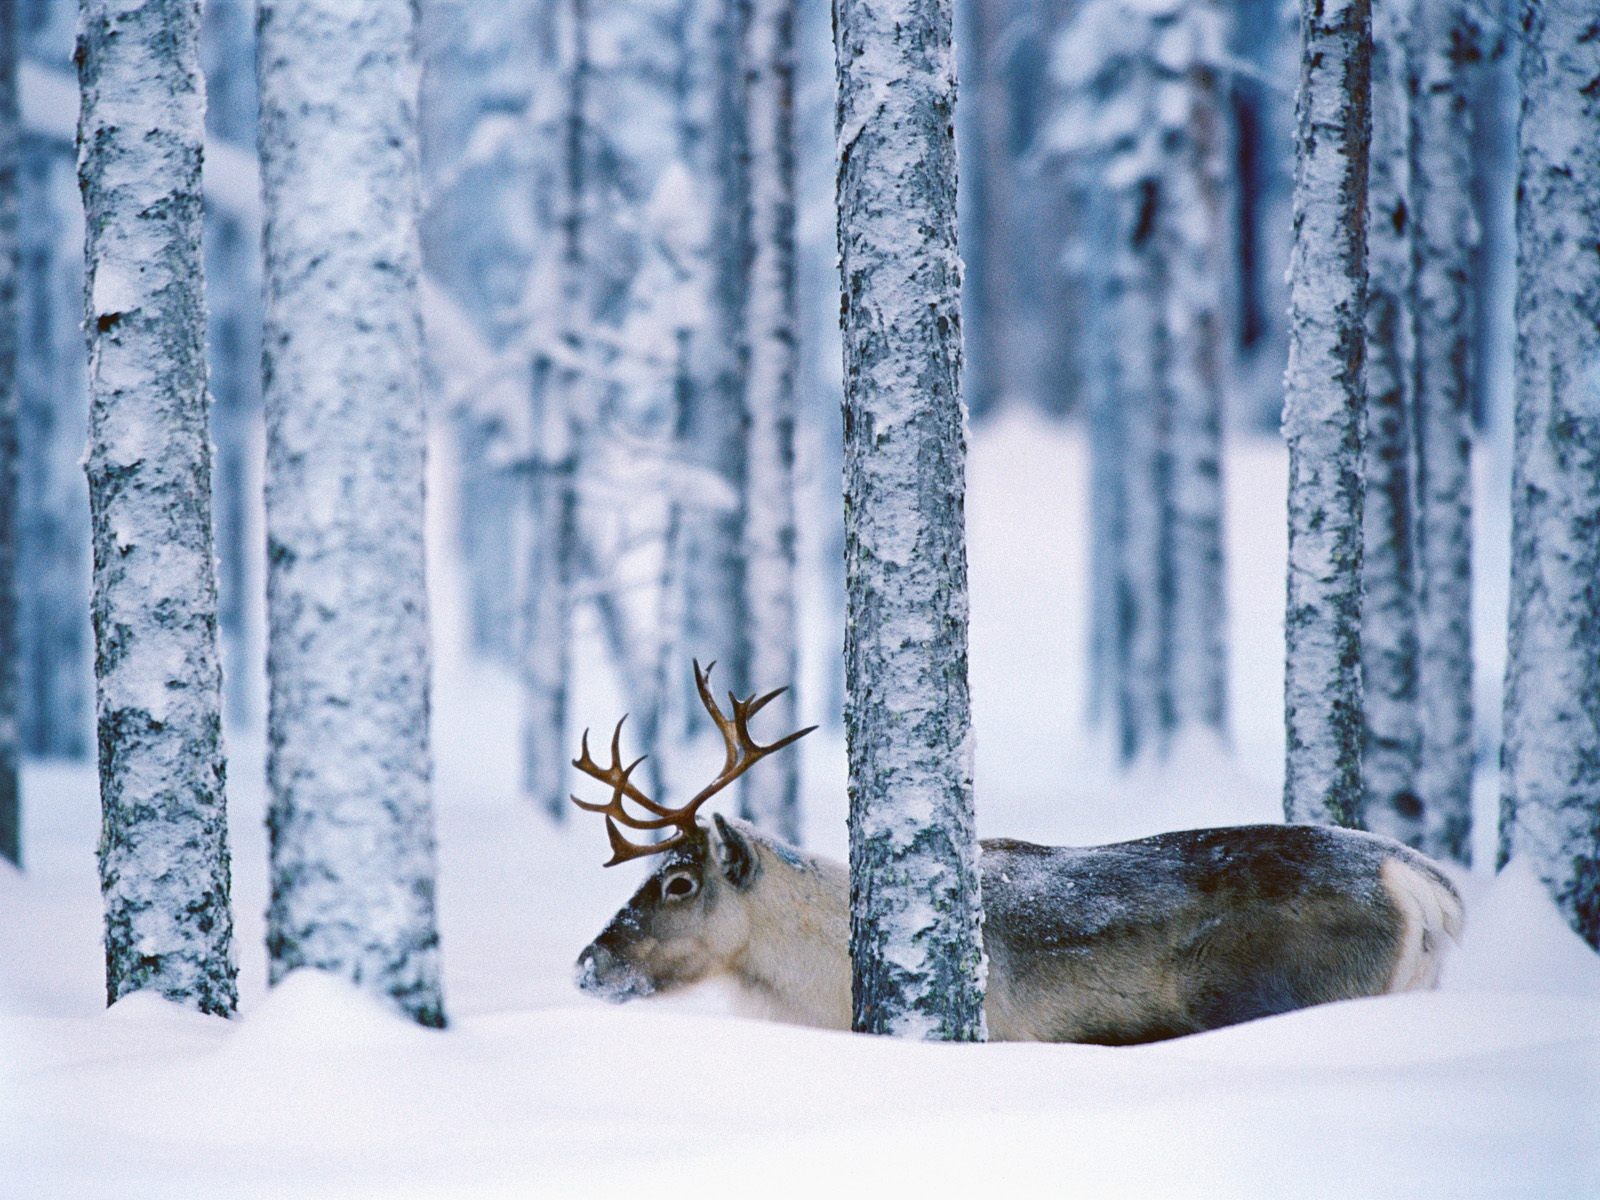 General 1600x1200 reindeer trees snow animals forest winter outdoors mammals deer